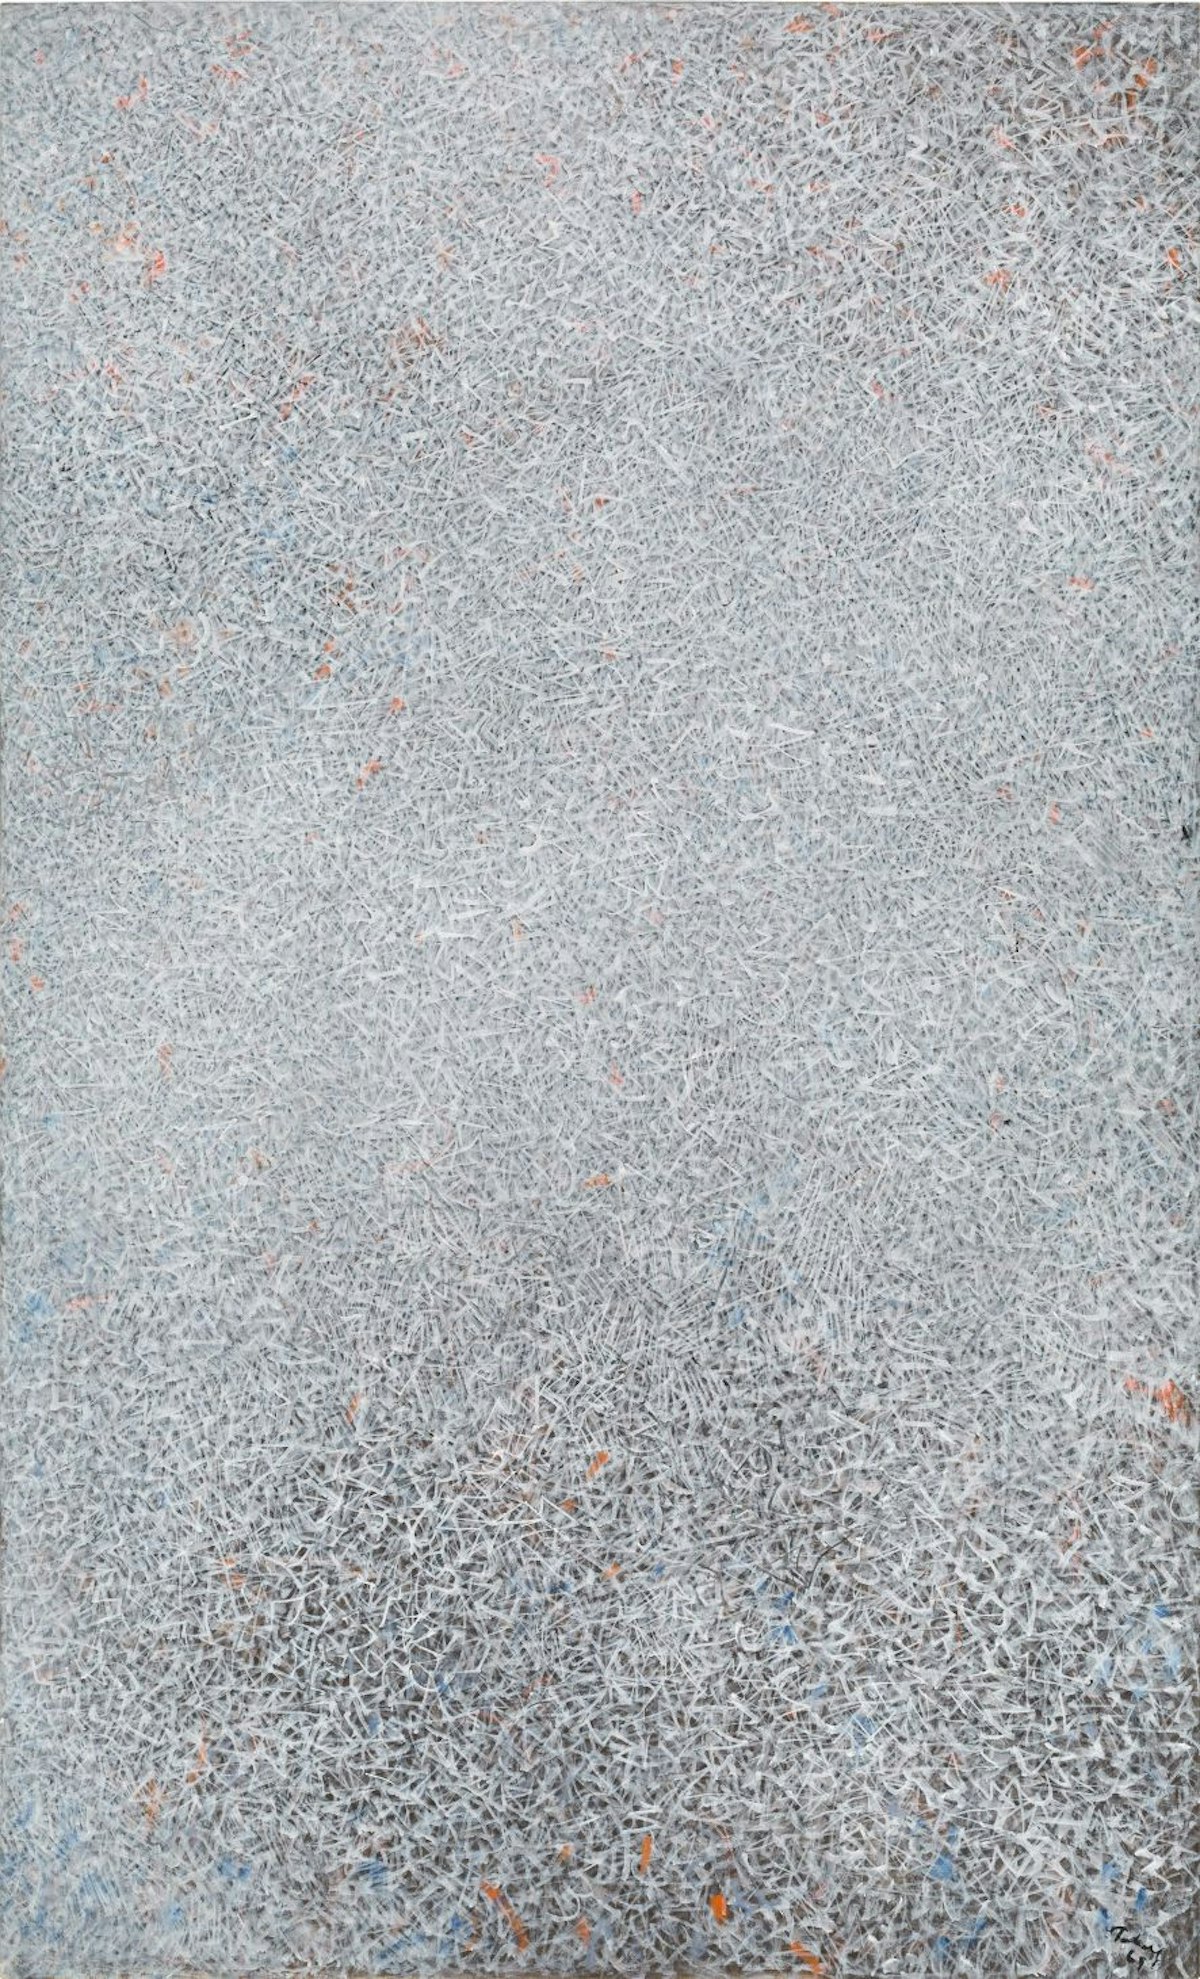 Mark Tobey
Mondo bianco(White World), 1969
Olio su tela
152.4 x 91.12 cm
Hirshhorn Museum and Sculpture Garden, Smithsonian Institution, Washington, DC, Donazione Joseph H.Hirshhorn, 1972, 72.294